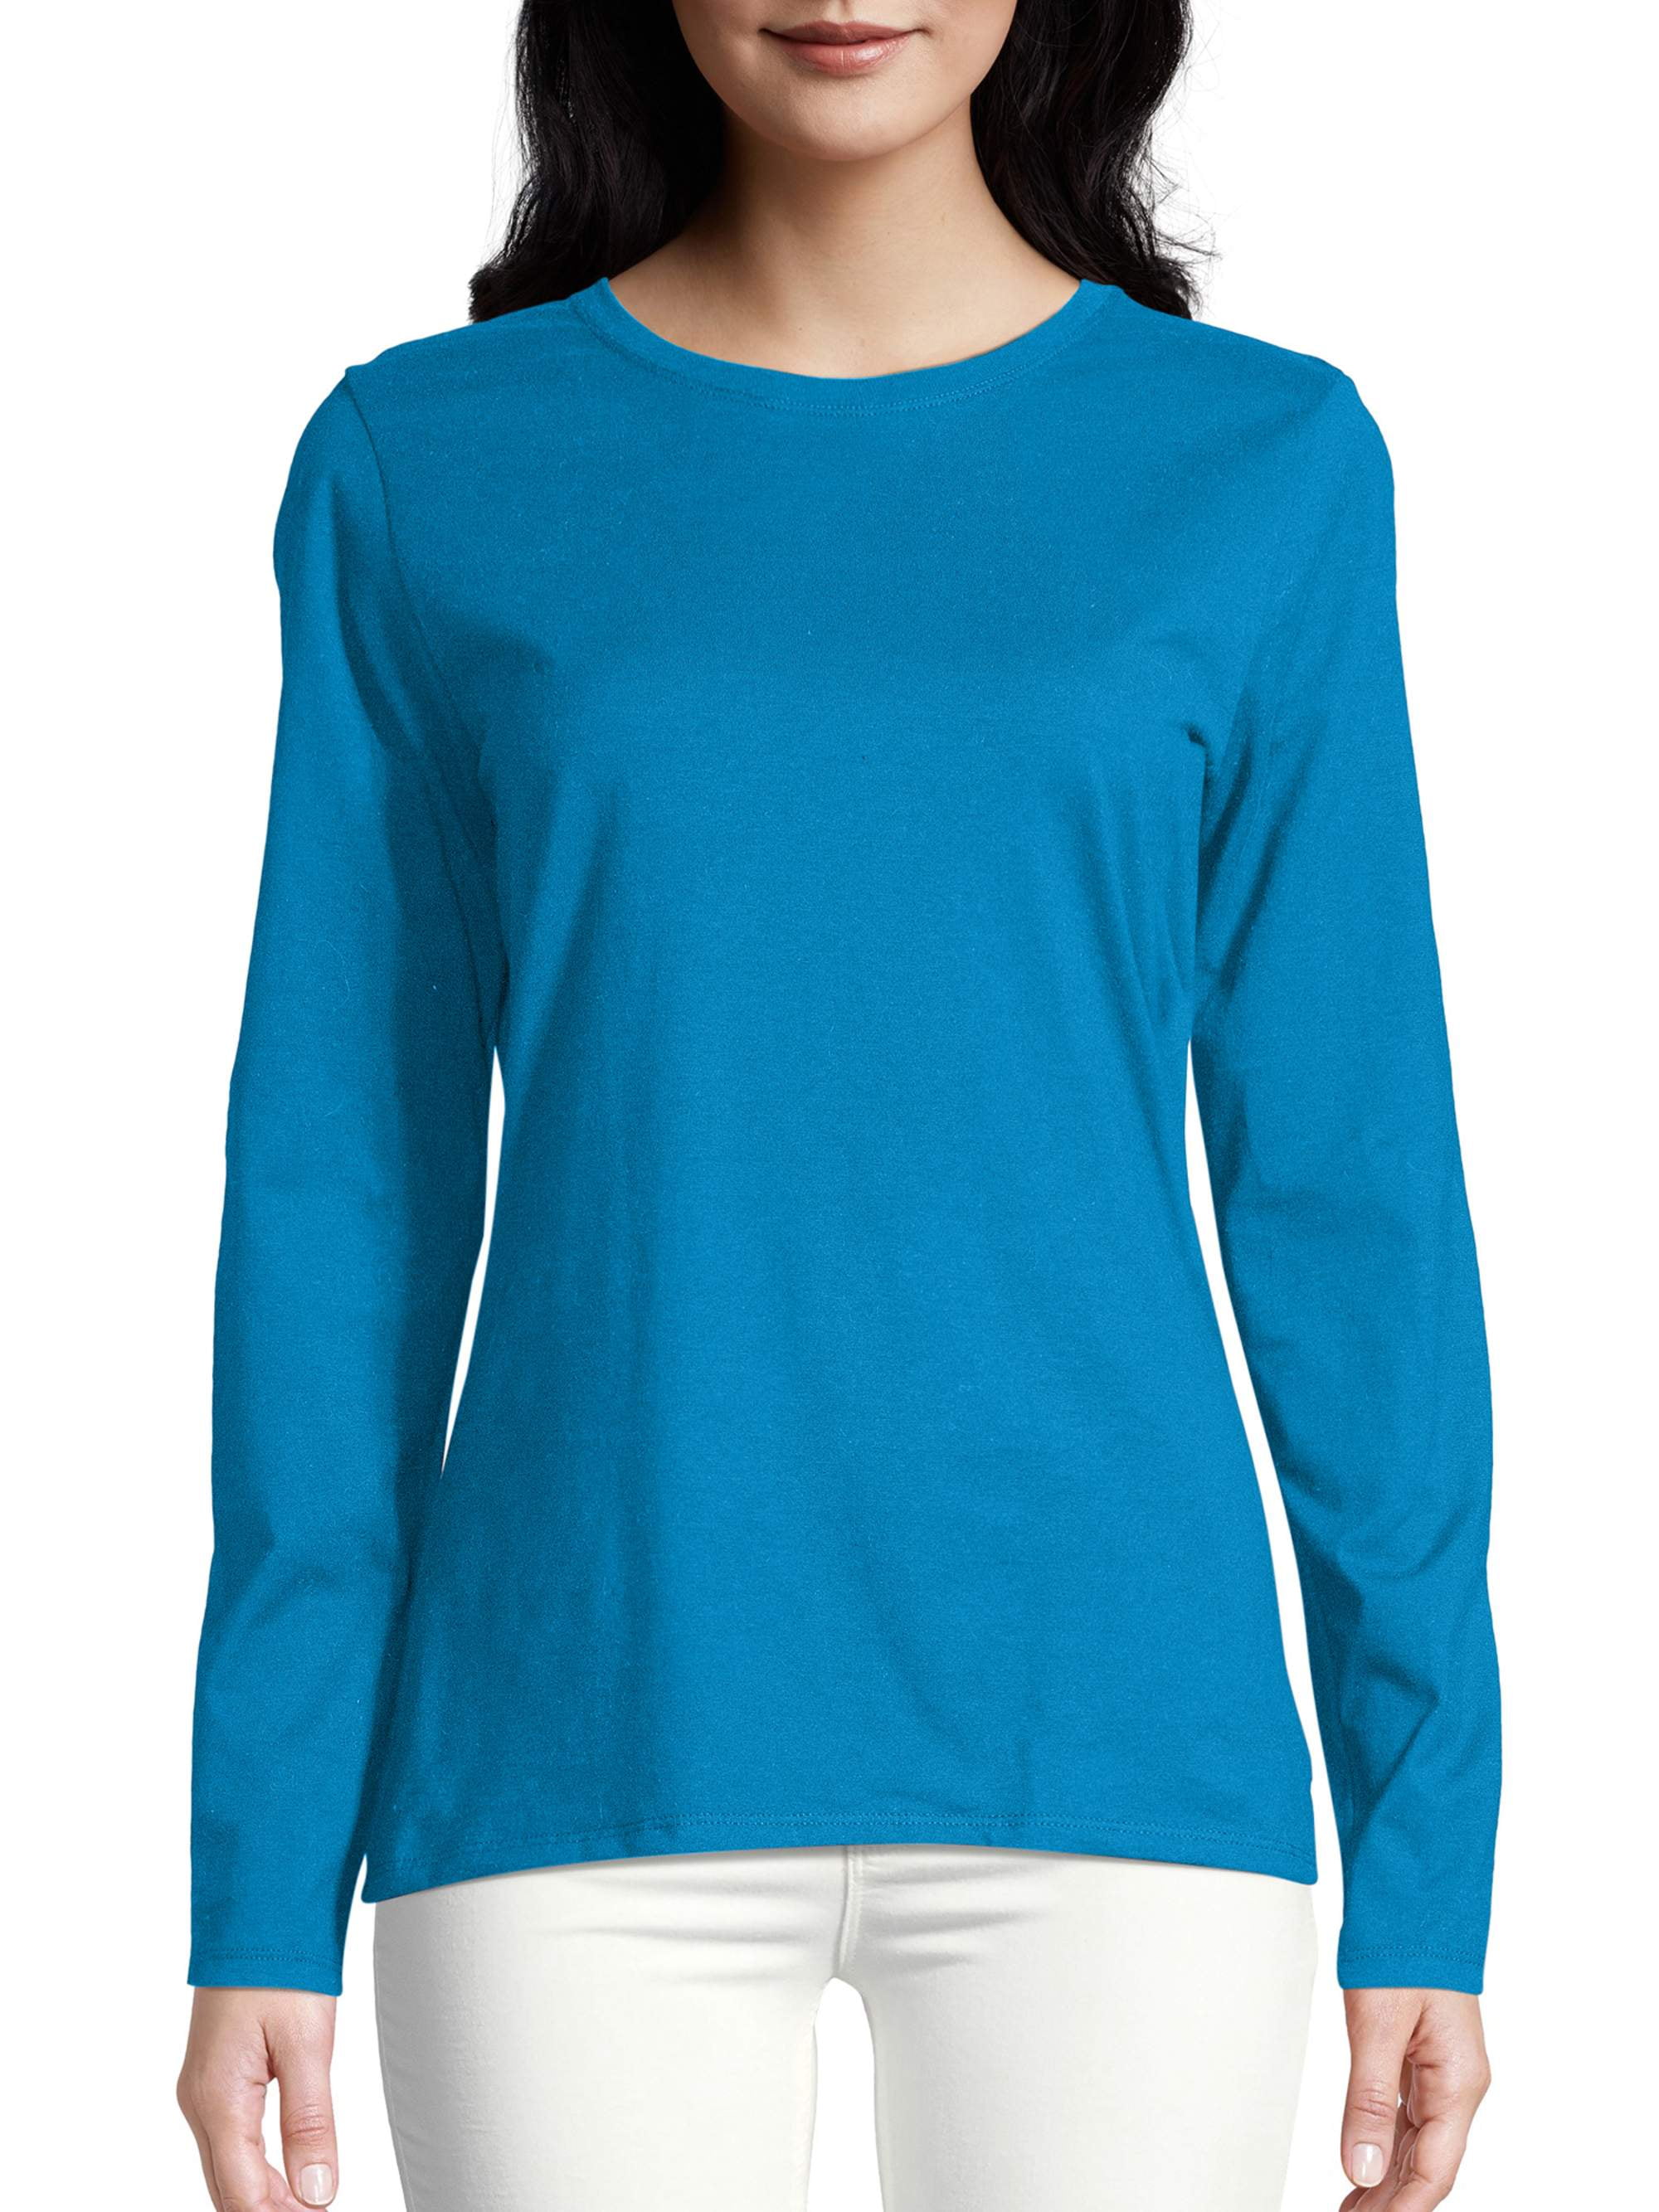 C.O.F® New Kids Girls Plain Long Sleeve Basic Stretch Round Neck T-Shirt